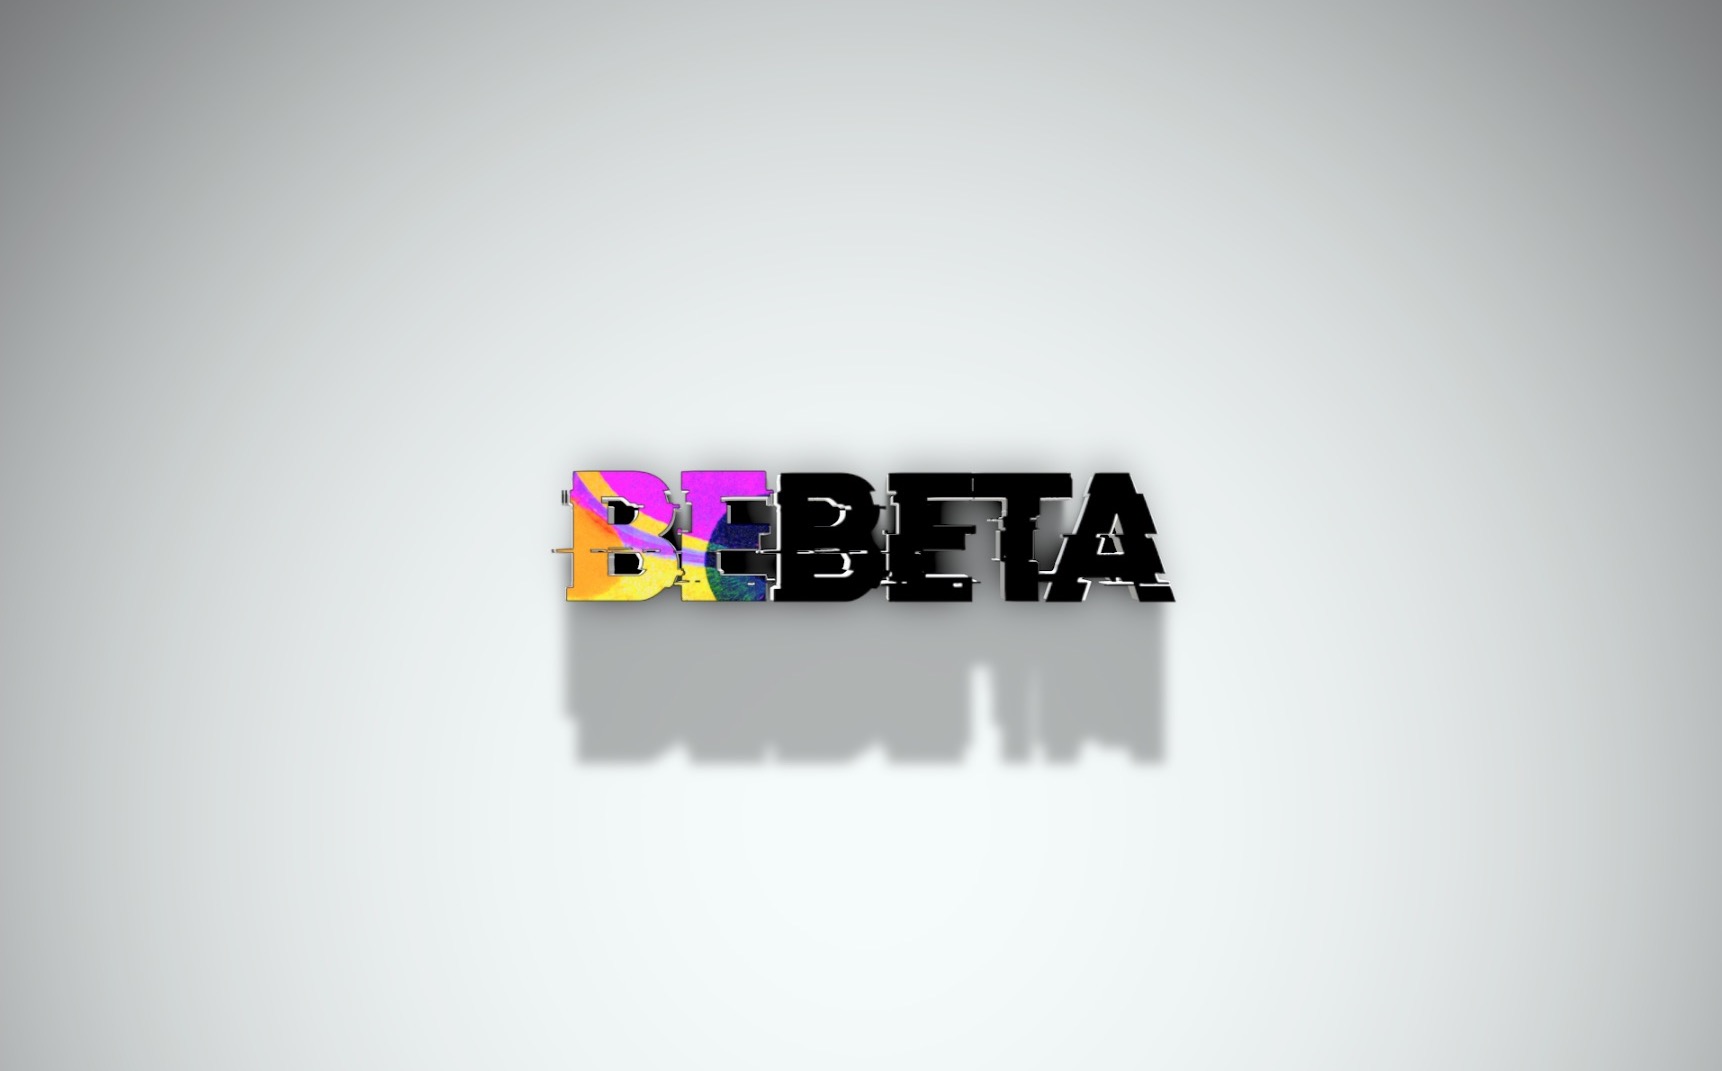 BEBETA LOGO & MOTION FX